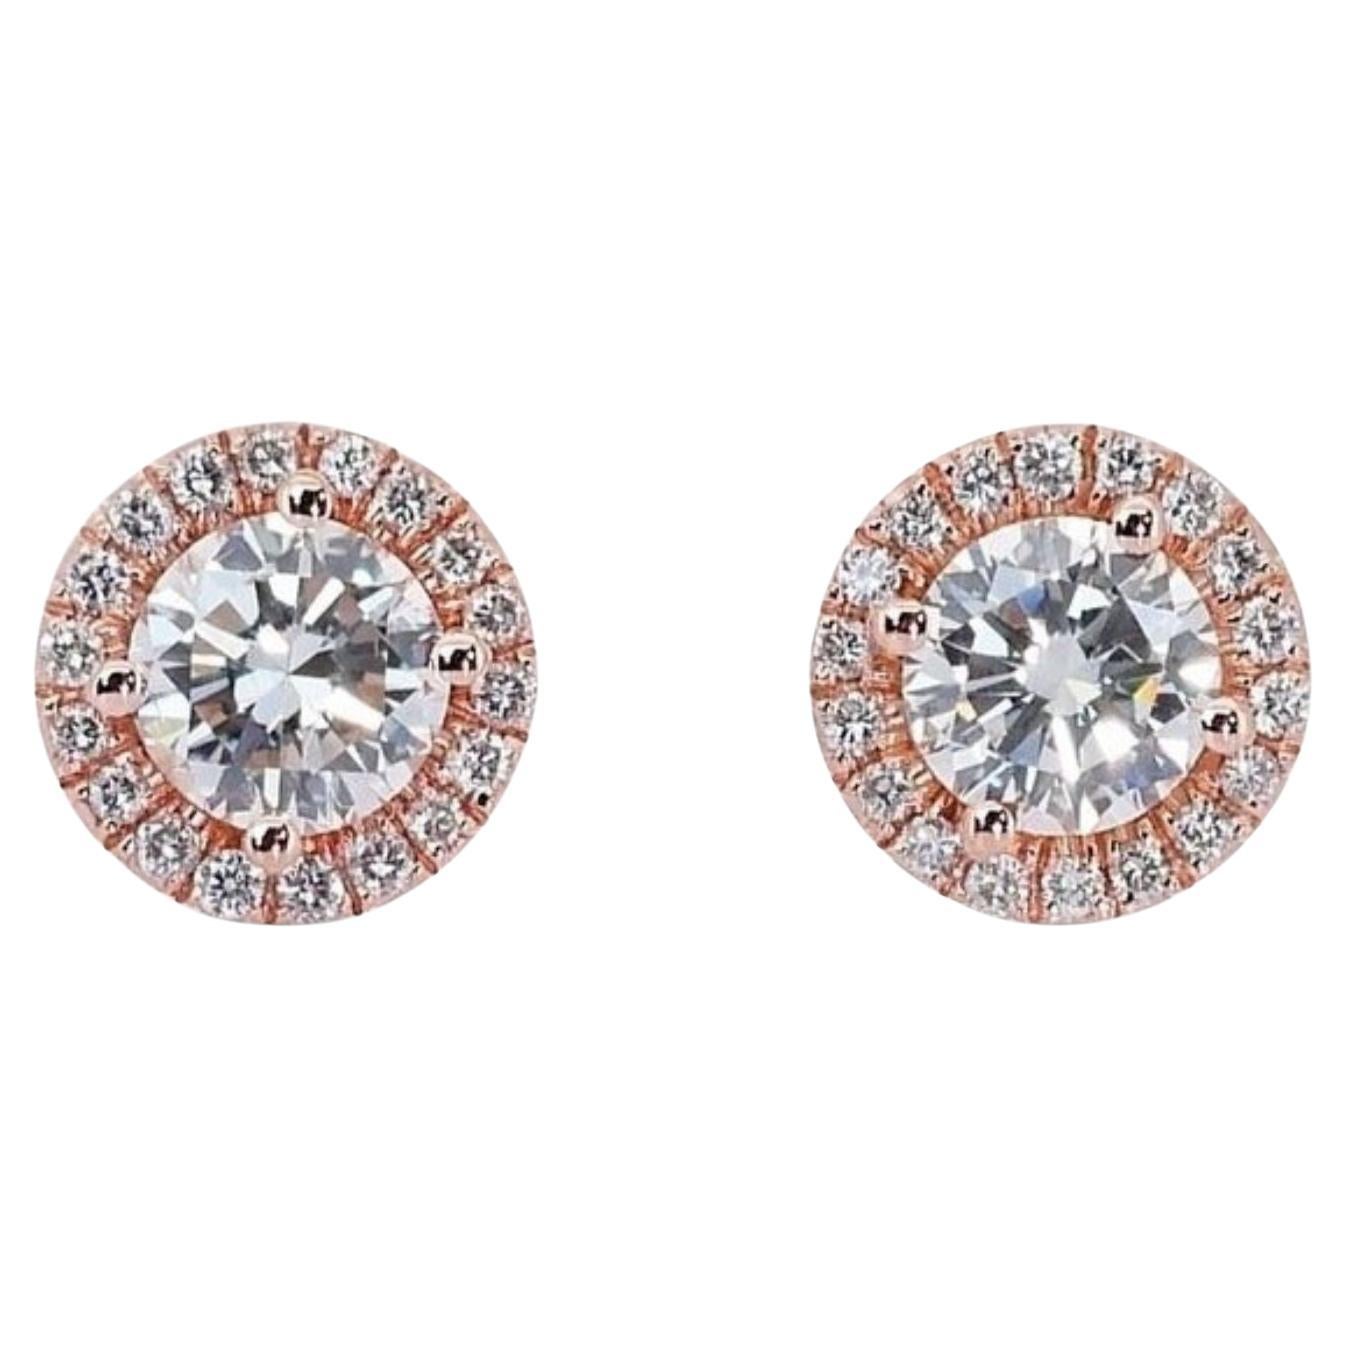 Stunning Diamond Earrings with 1.2 carat Round Brilliant Diamond For Sale